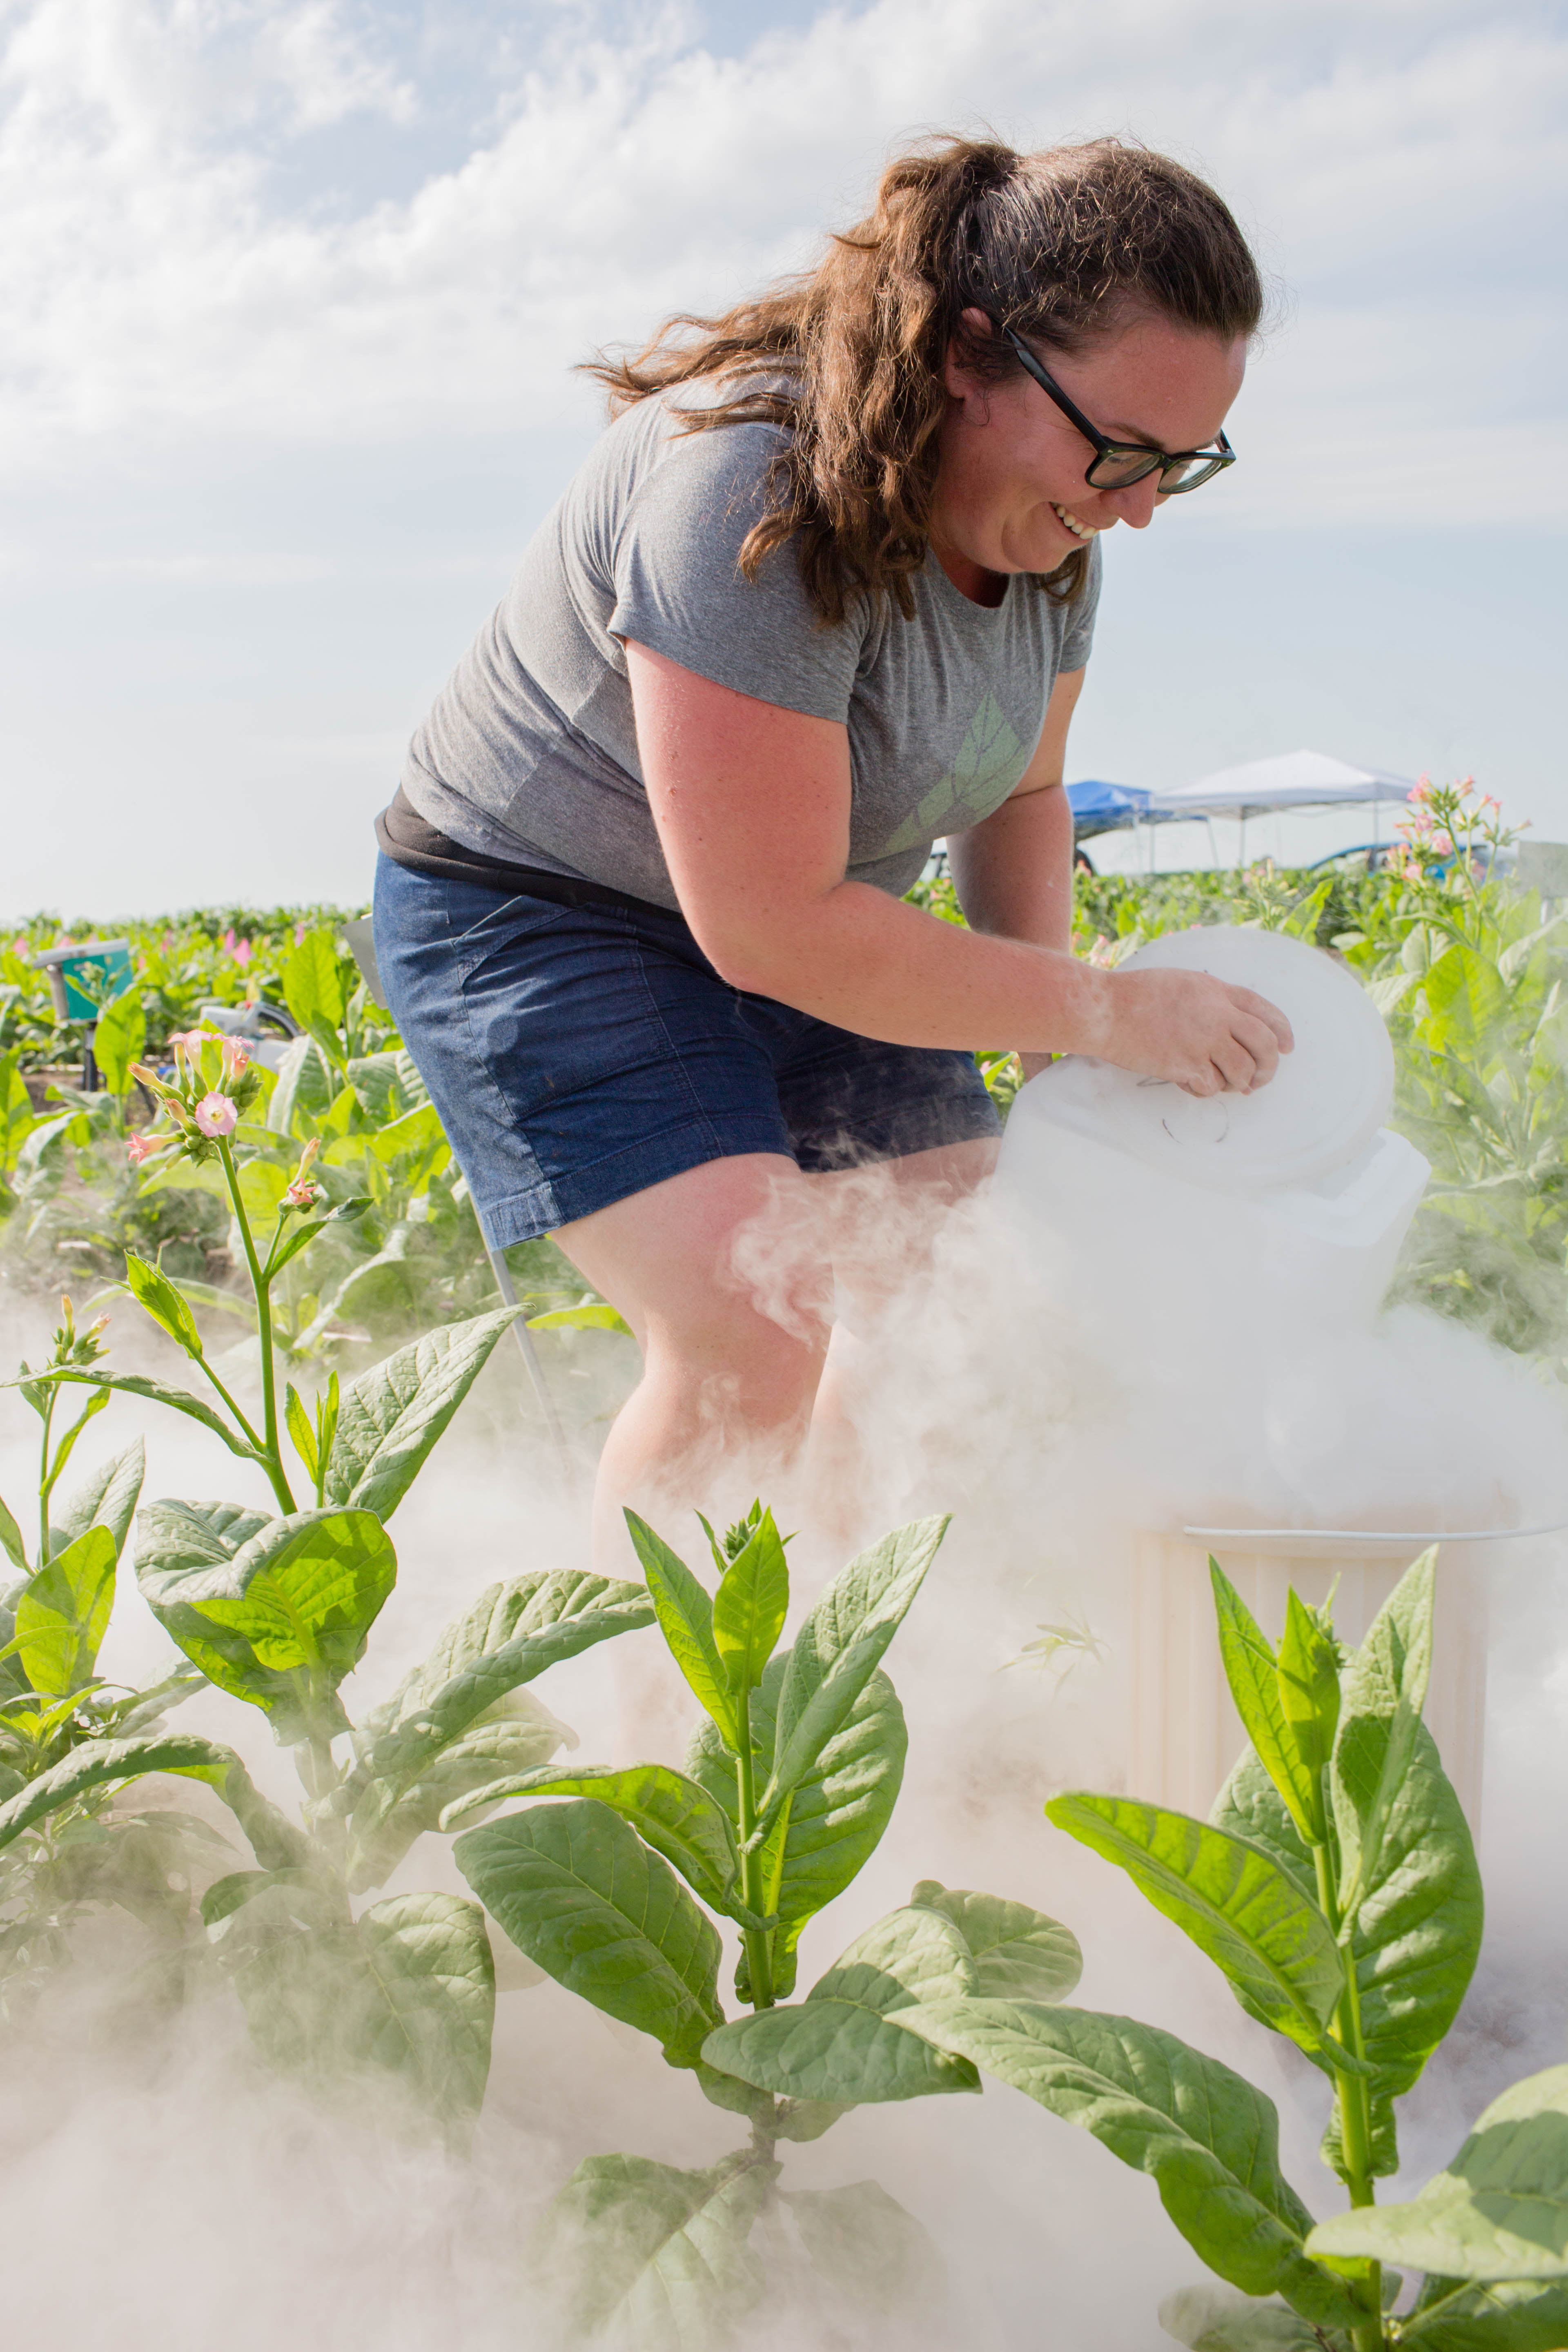 Amanda Cavanagh works with liquid nitrogen to in the field trials. 